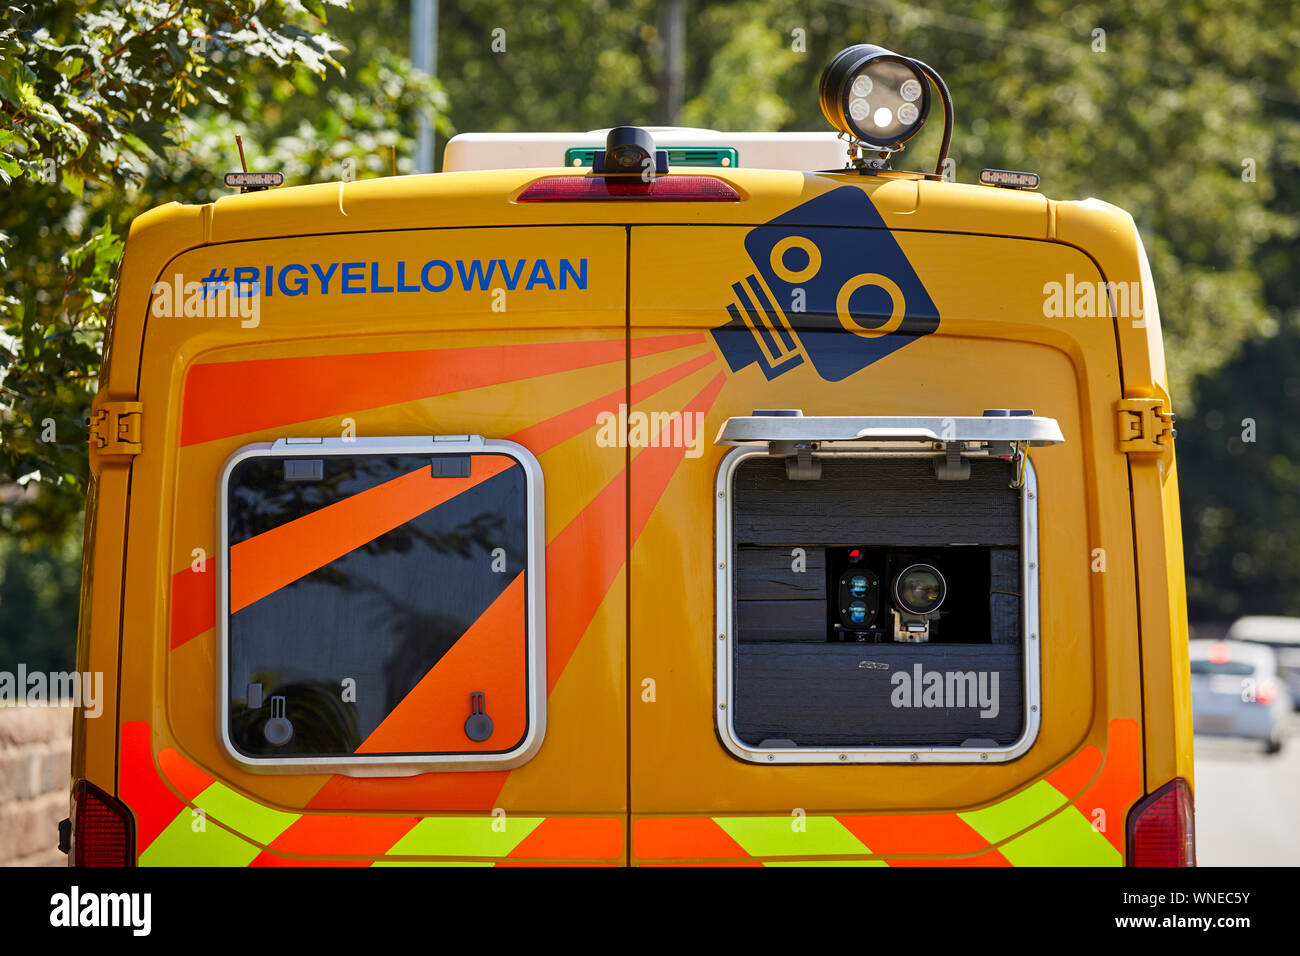 Cheshire Constabulary safety camera yellow speed enforcement camera van working in Warrington Stock Photo